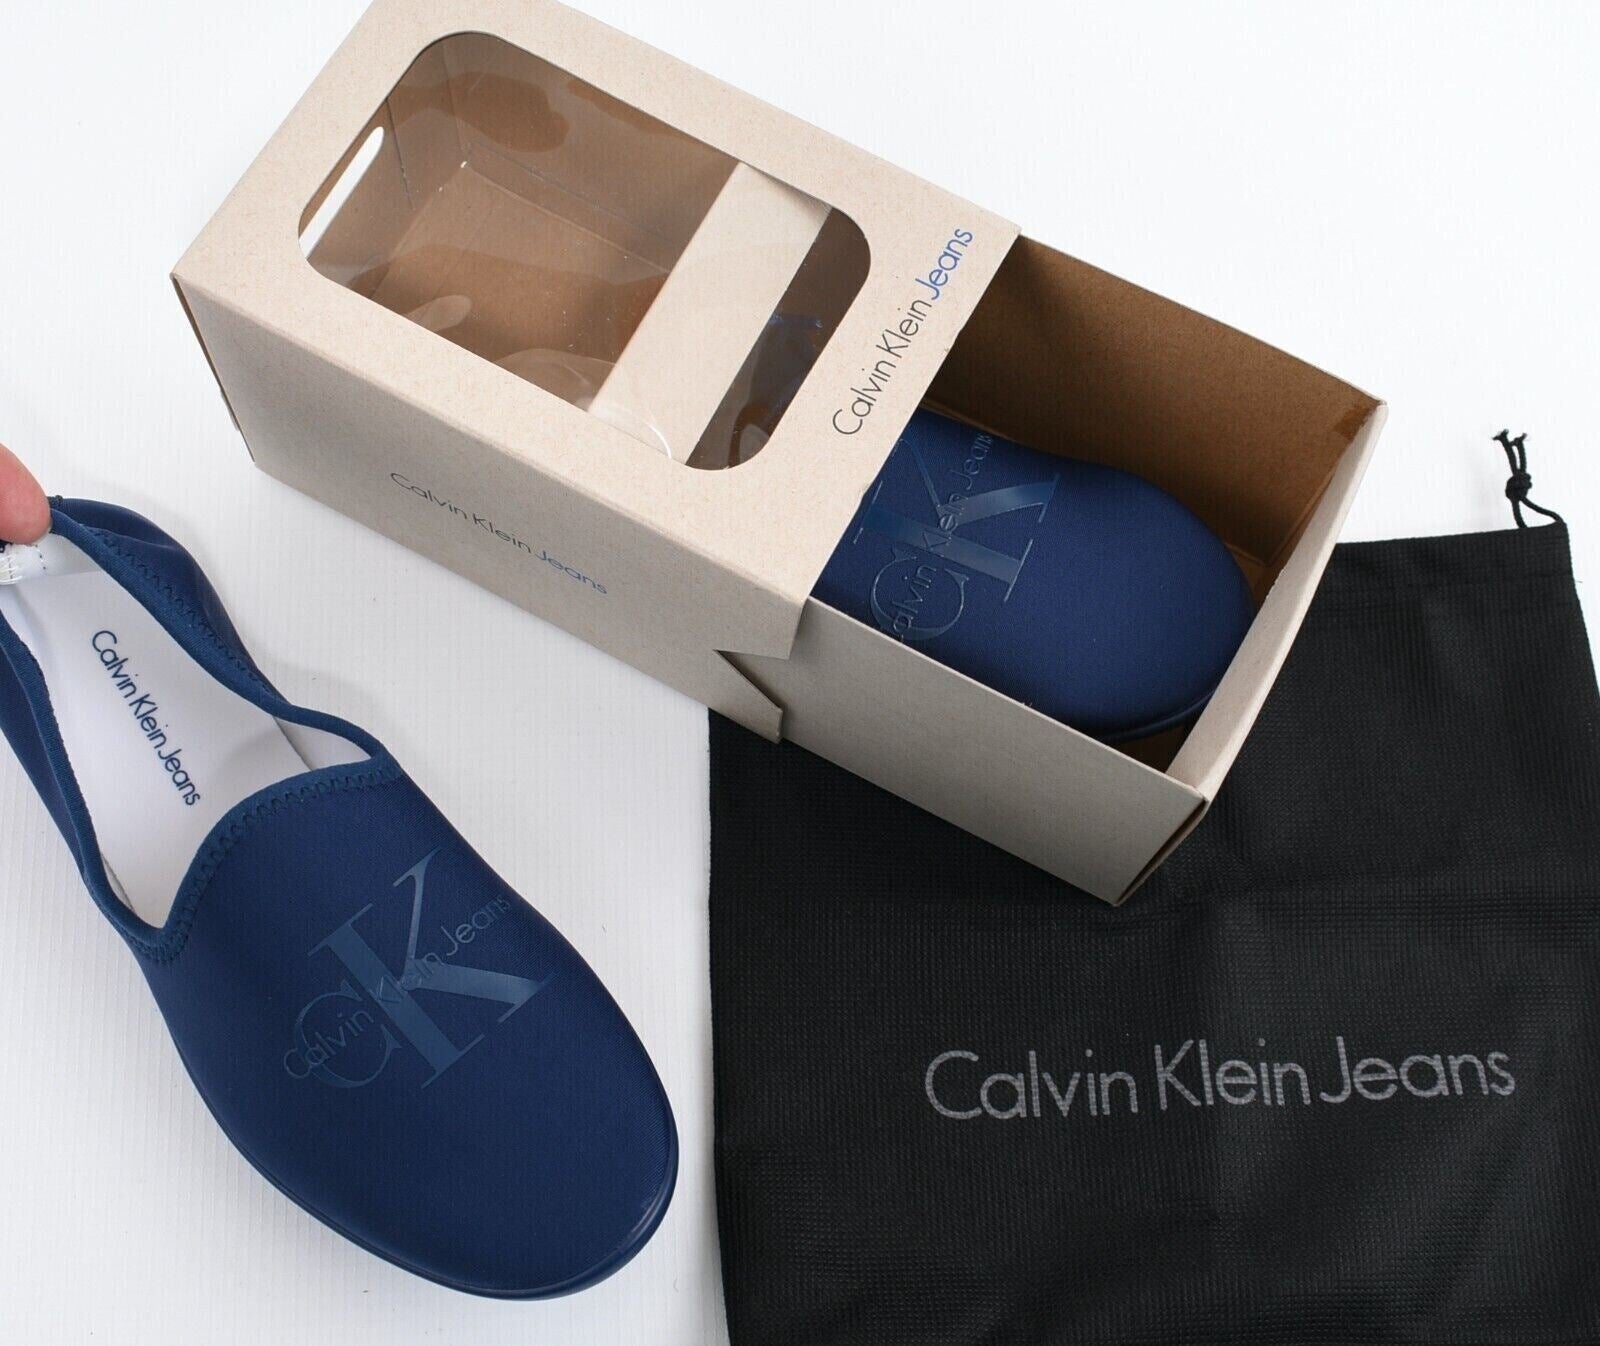 CALVIN KLEIN JEANS Womens TRACY Neoprene Slippers, Blue/White, size M (UK 6)